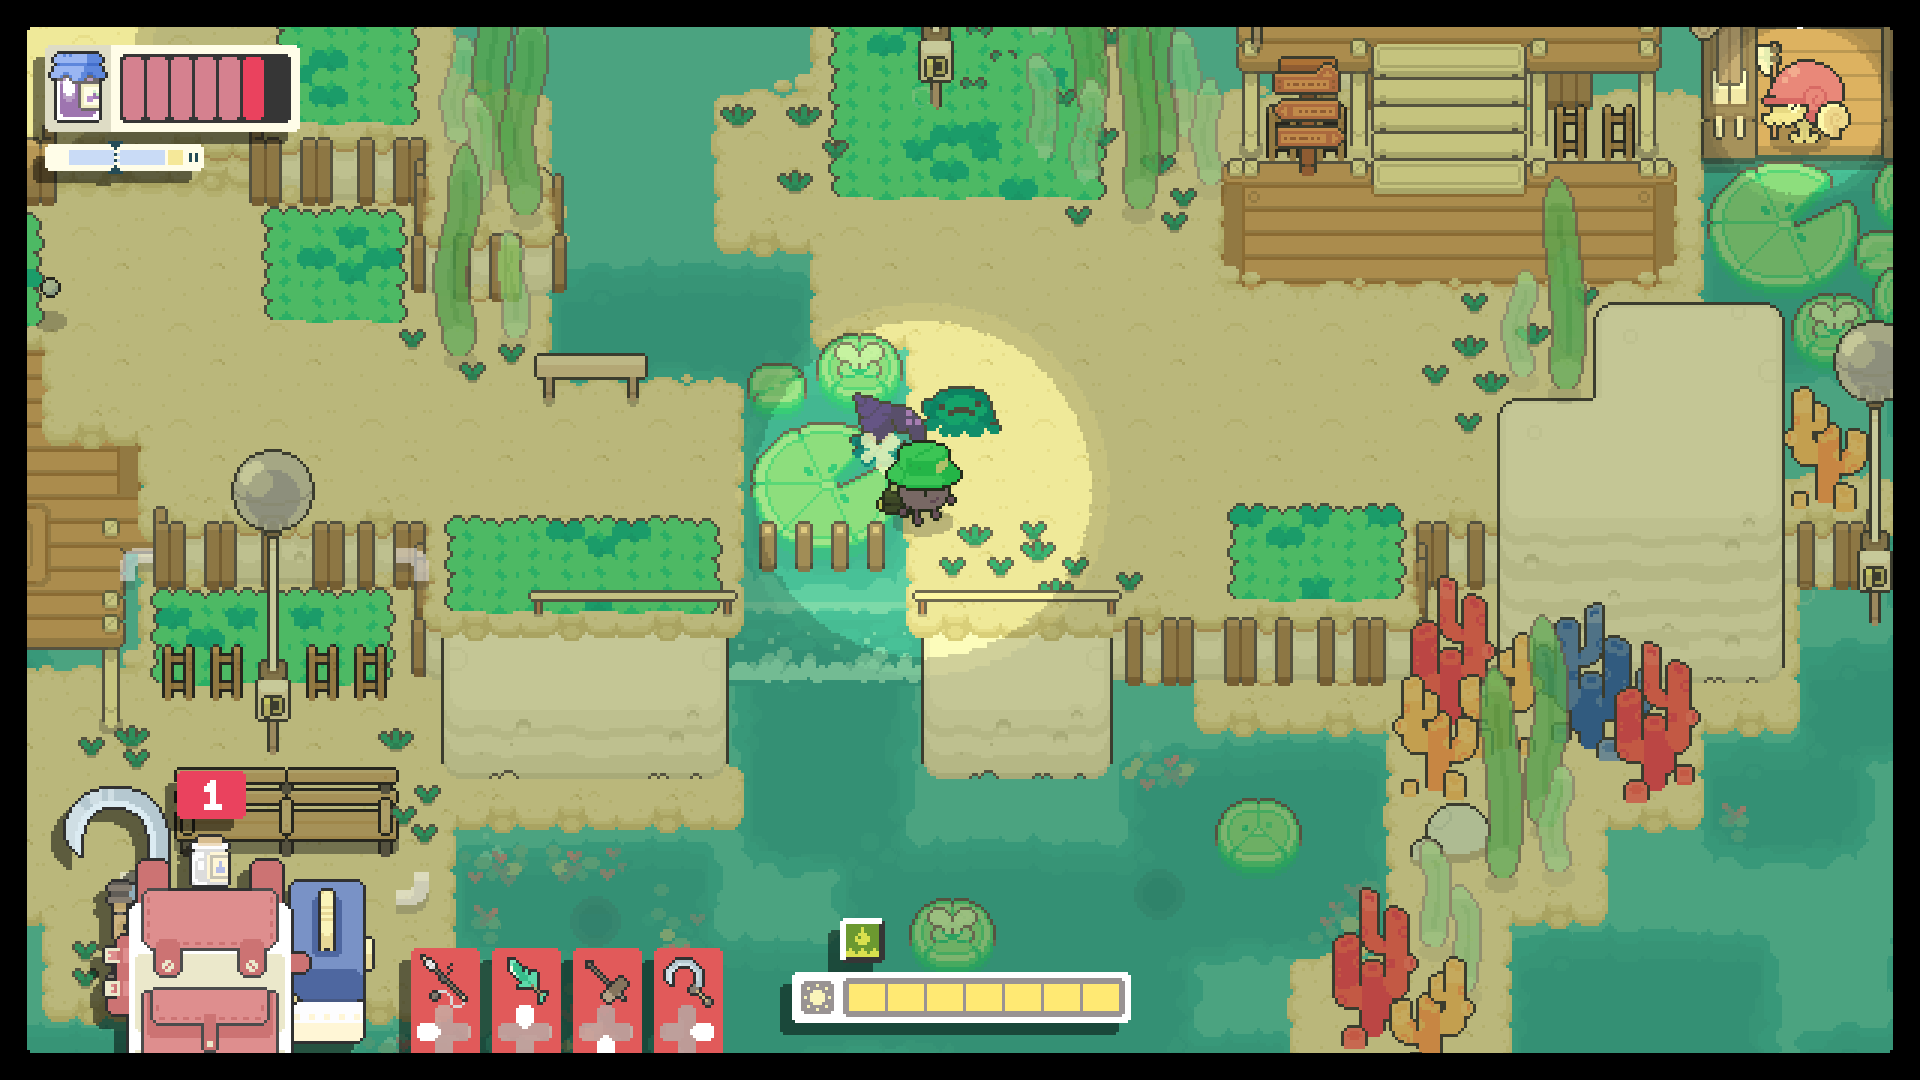 garden story video game